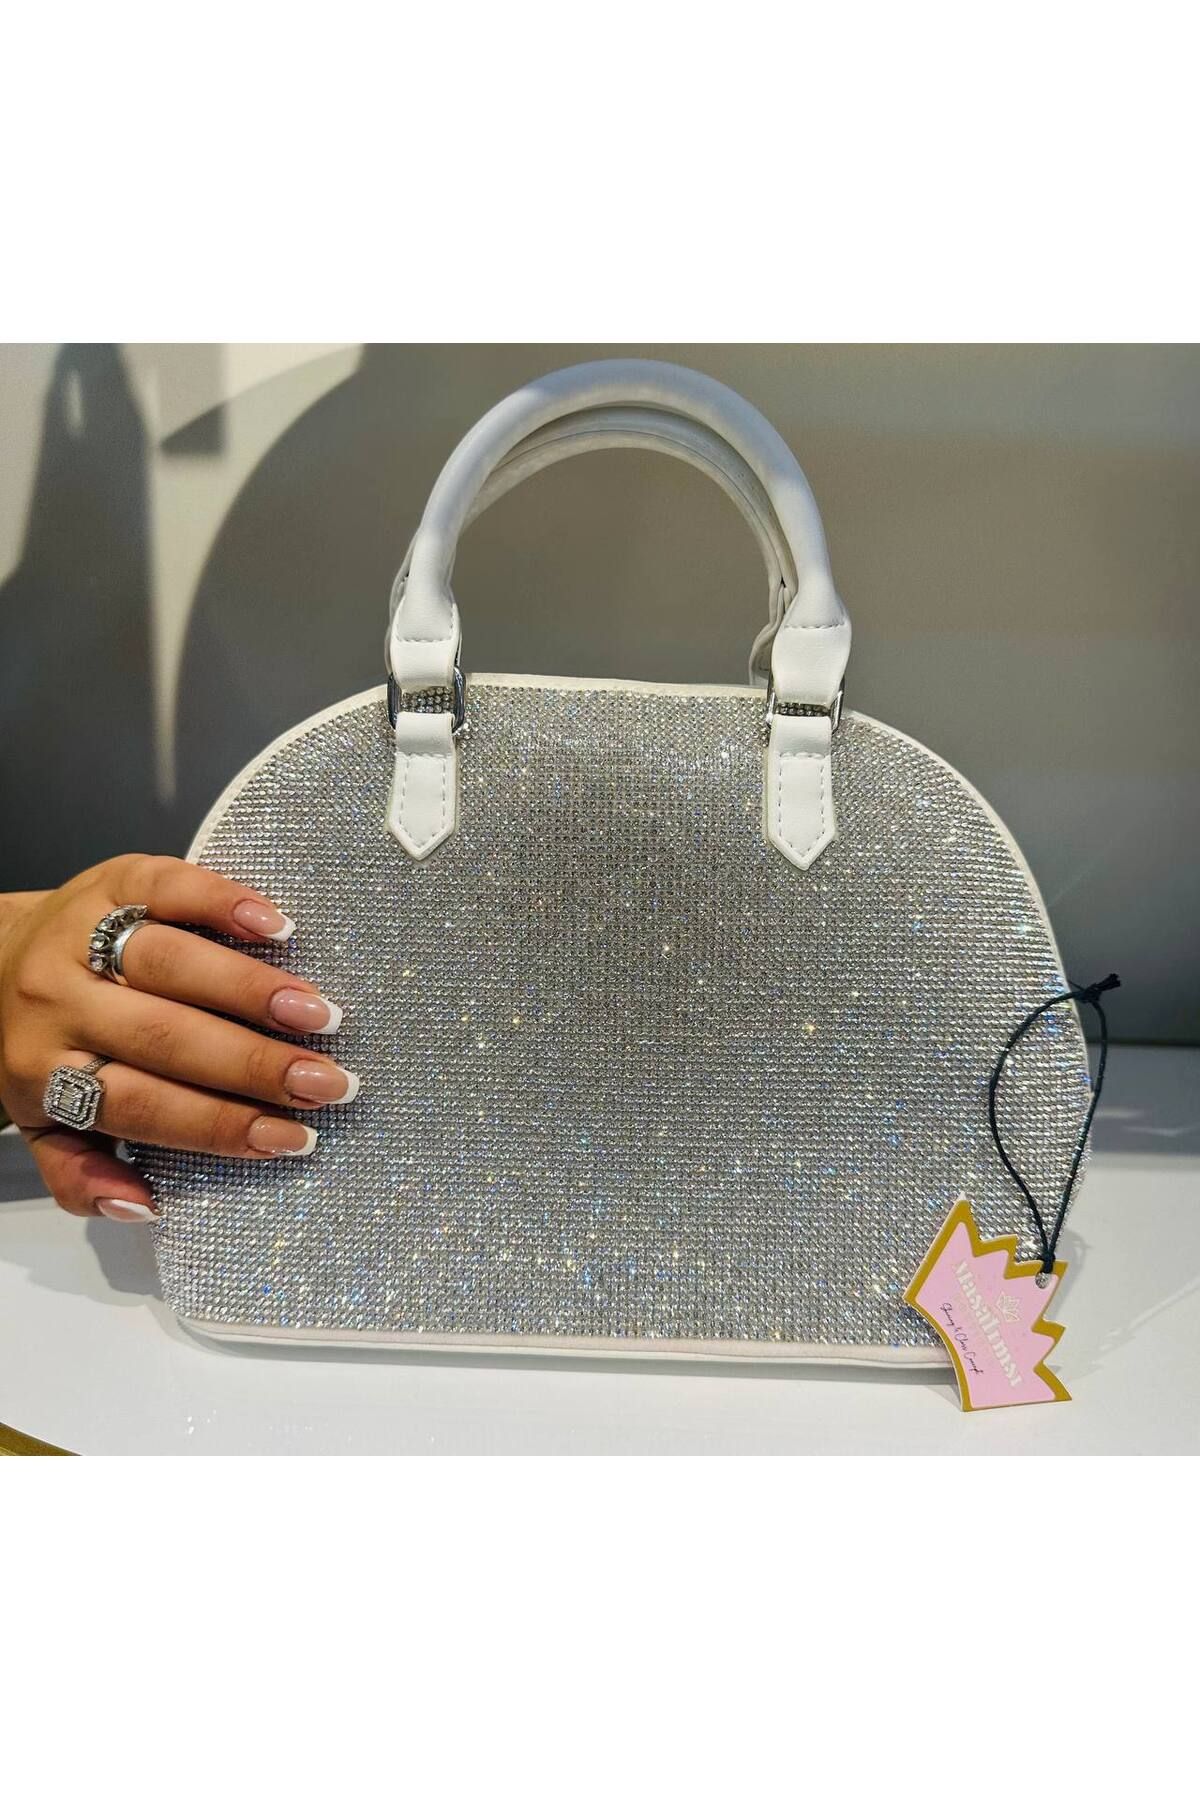 Aldo Women's Handbag (Natural) : Amazon.in: Fashion